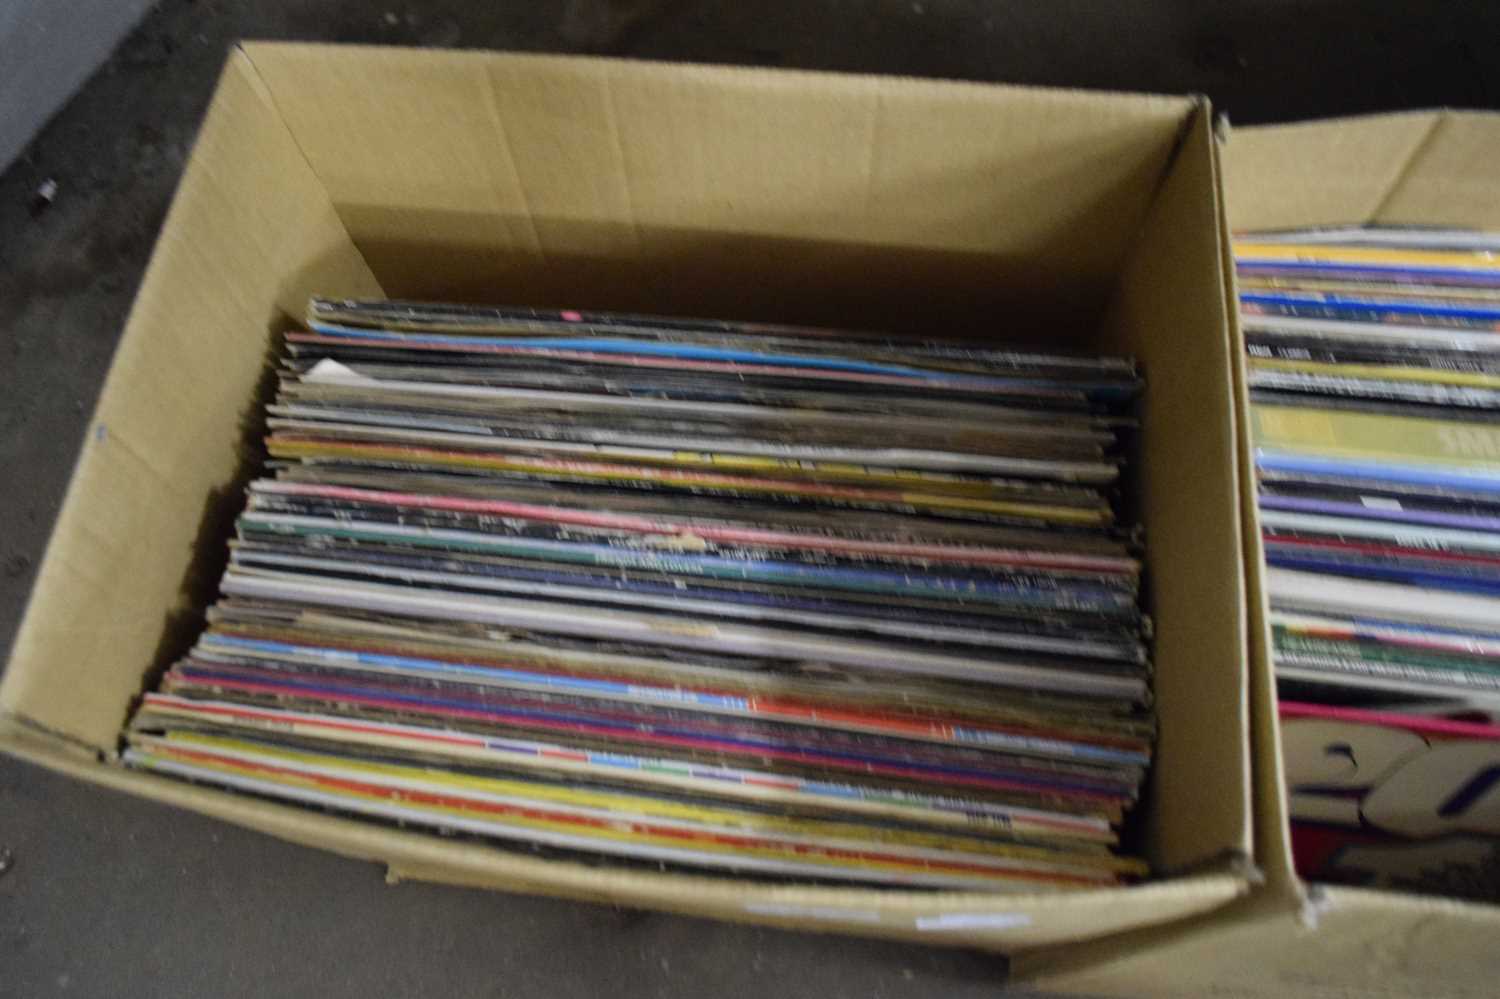 BOX OF MIXED RECORDS